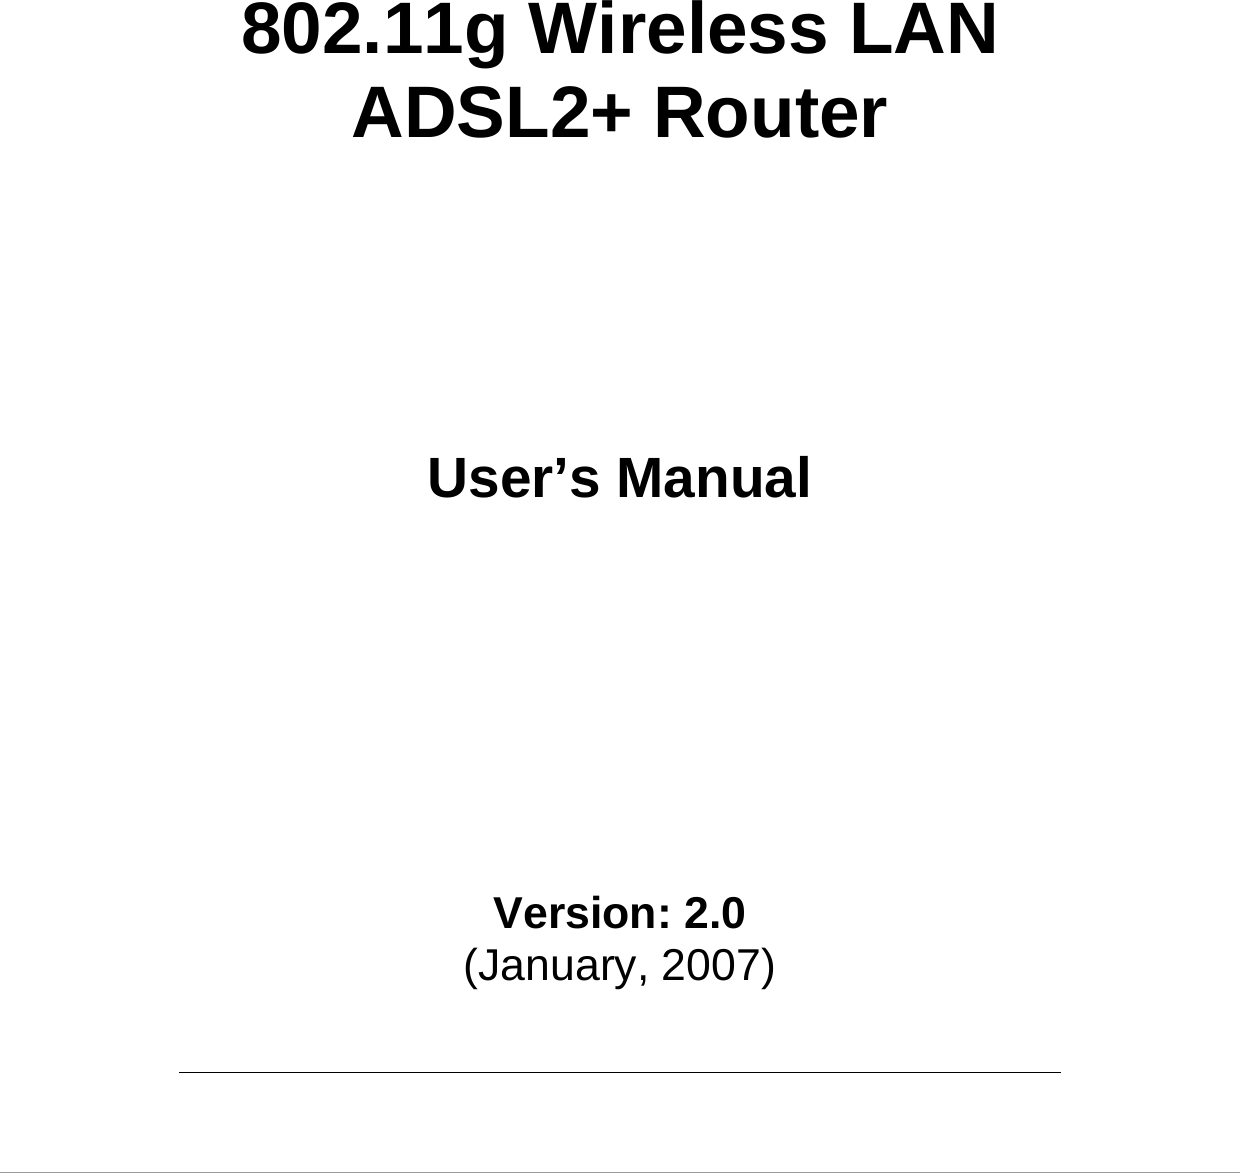       802.11g Wireless LAN ADSL2+ Router         User’s Manual          Version: 2.0 (January, 2007)  